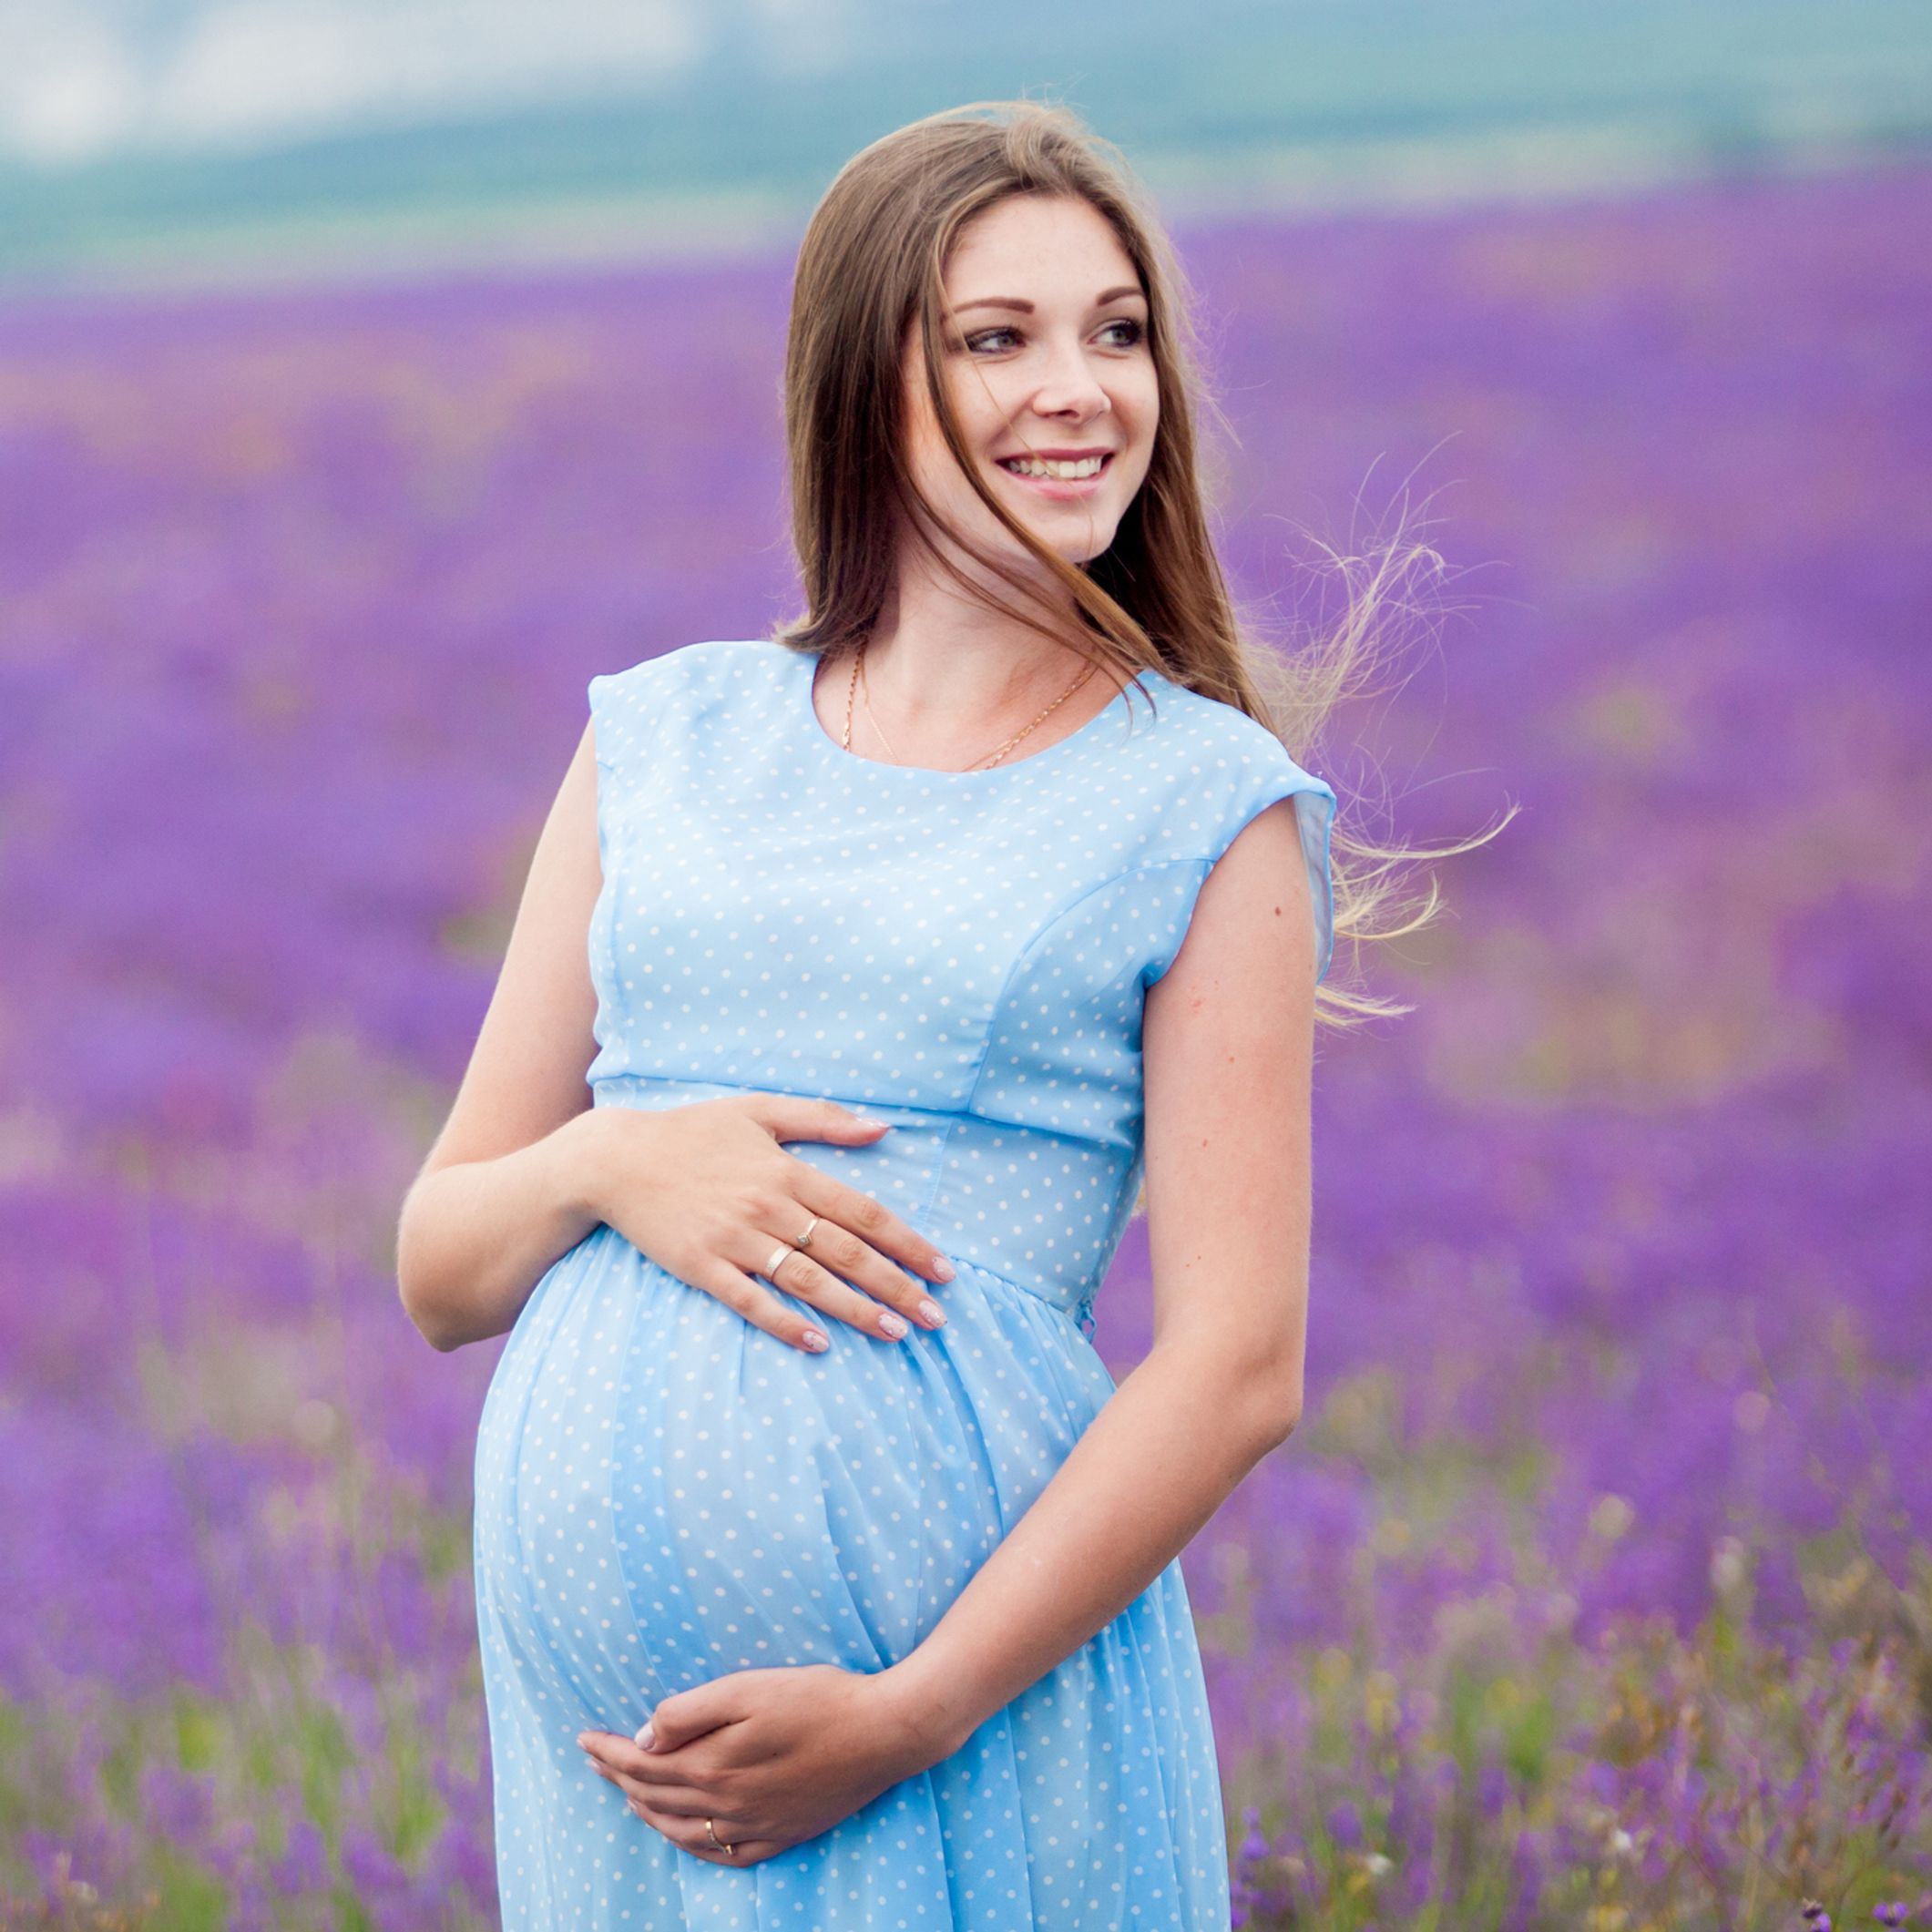 Royaume-Uni : une femme tombe enceinte pendant sa grossesse